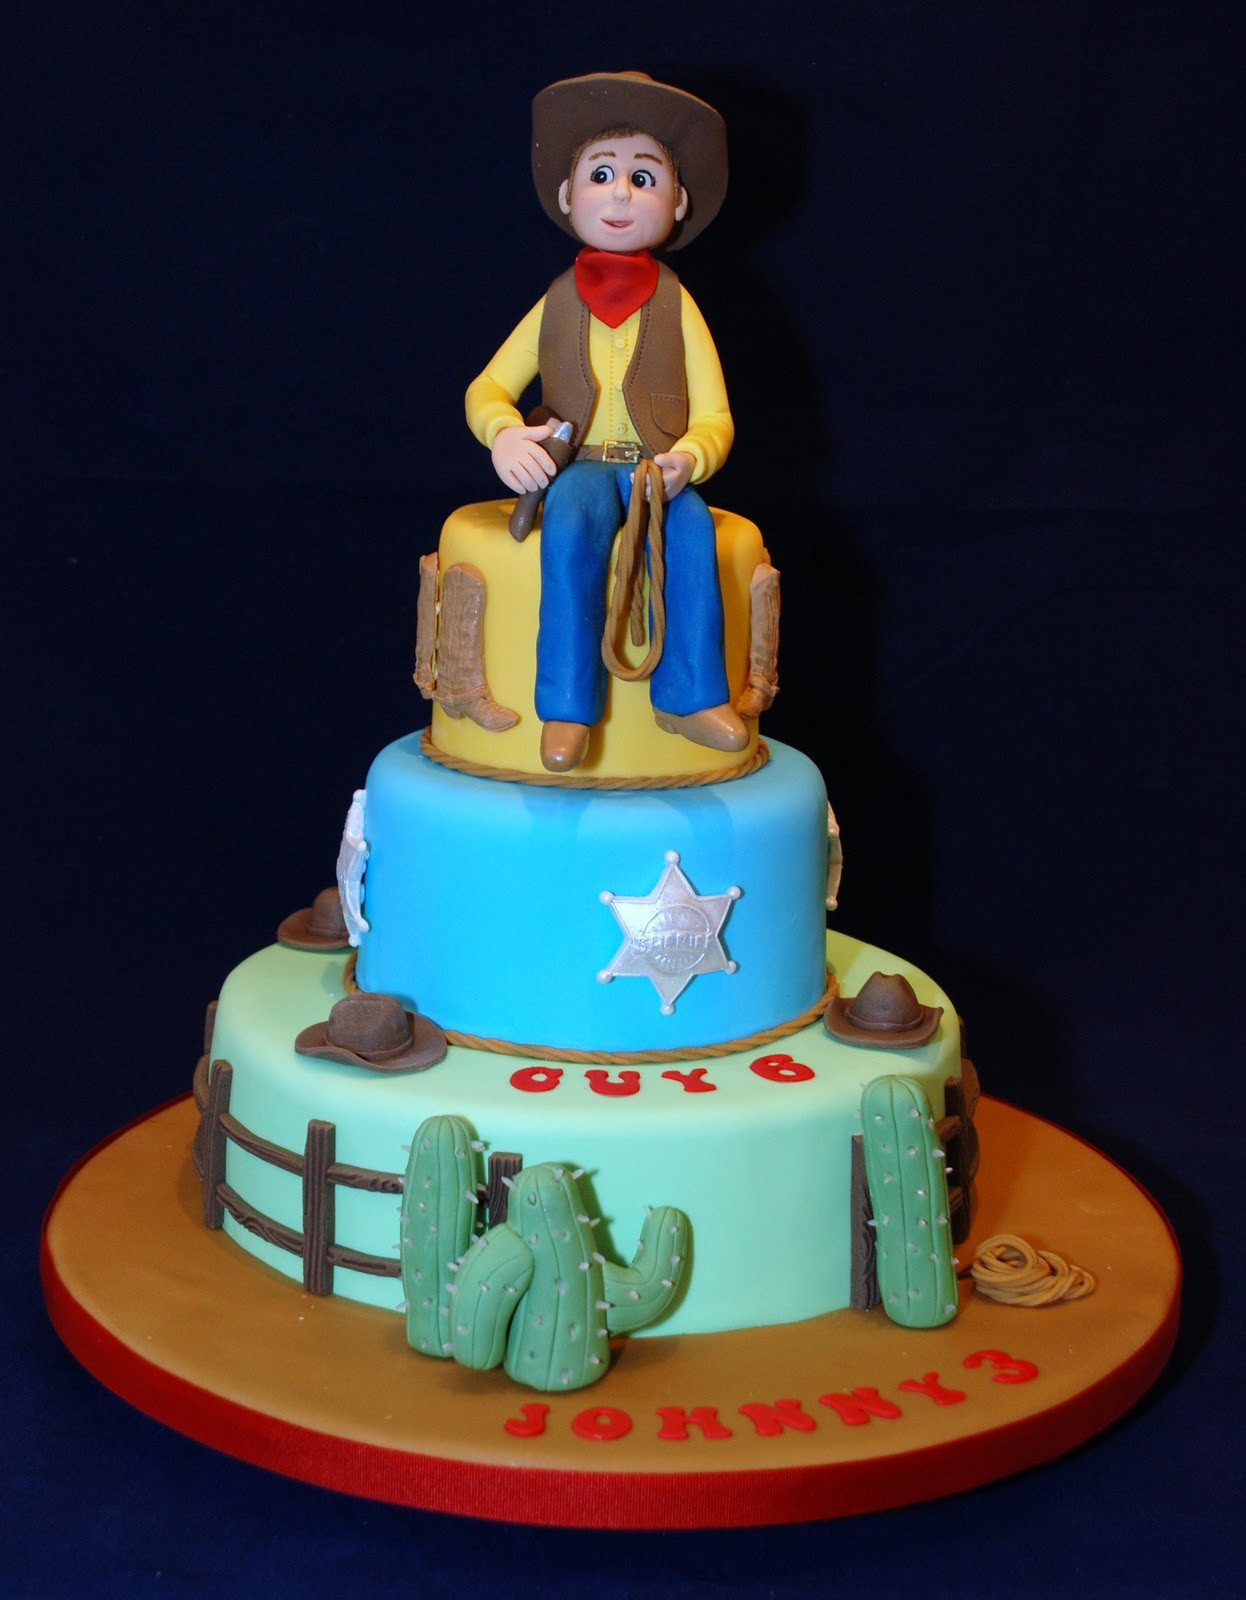 Cowboy Birthday Cake
 Icing Heaven Yee haa cowboy